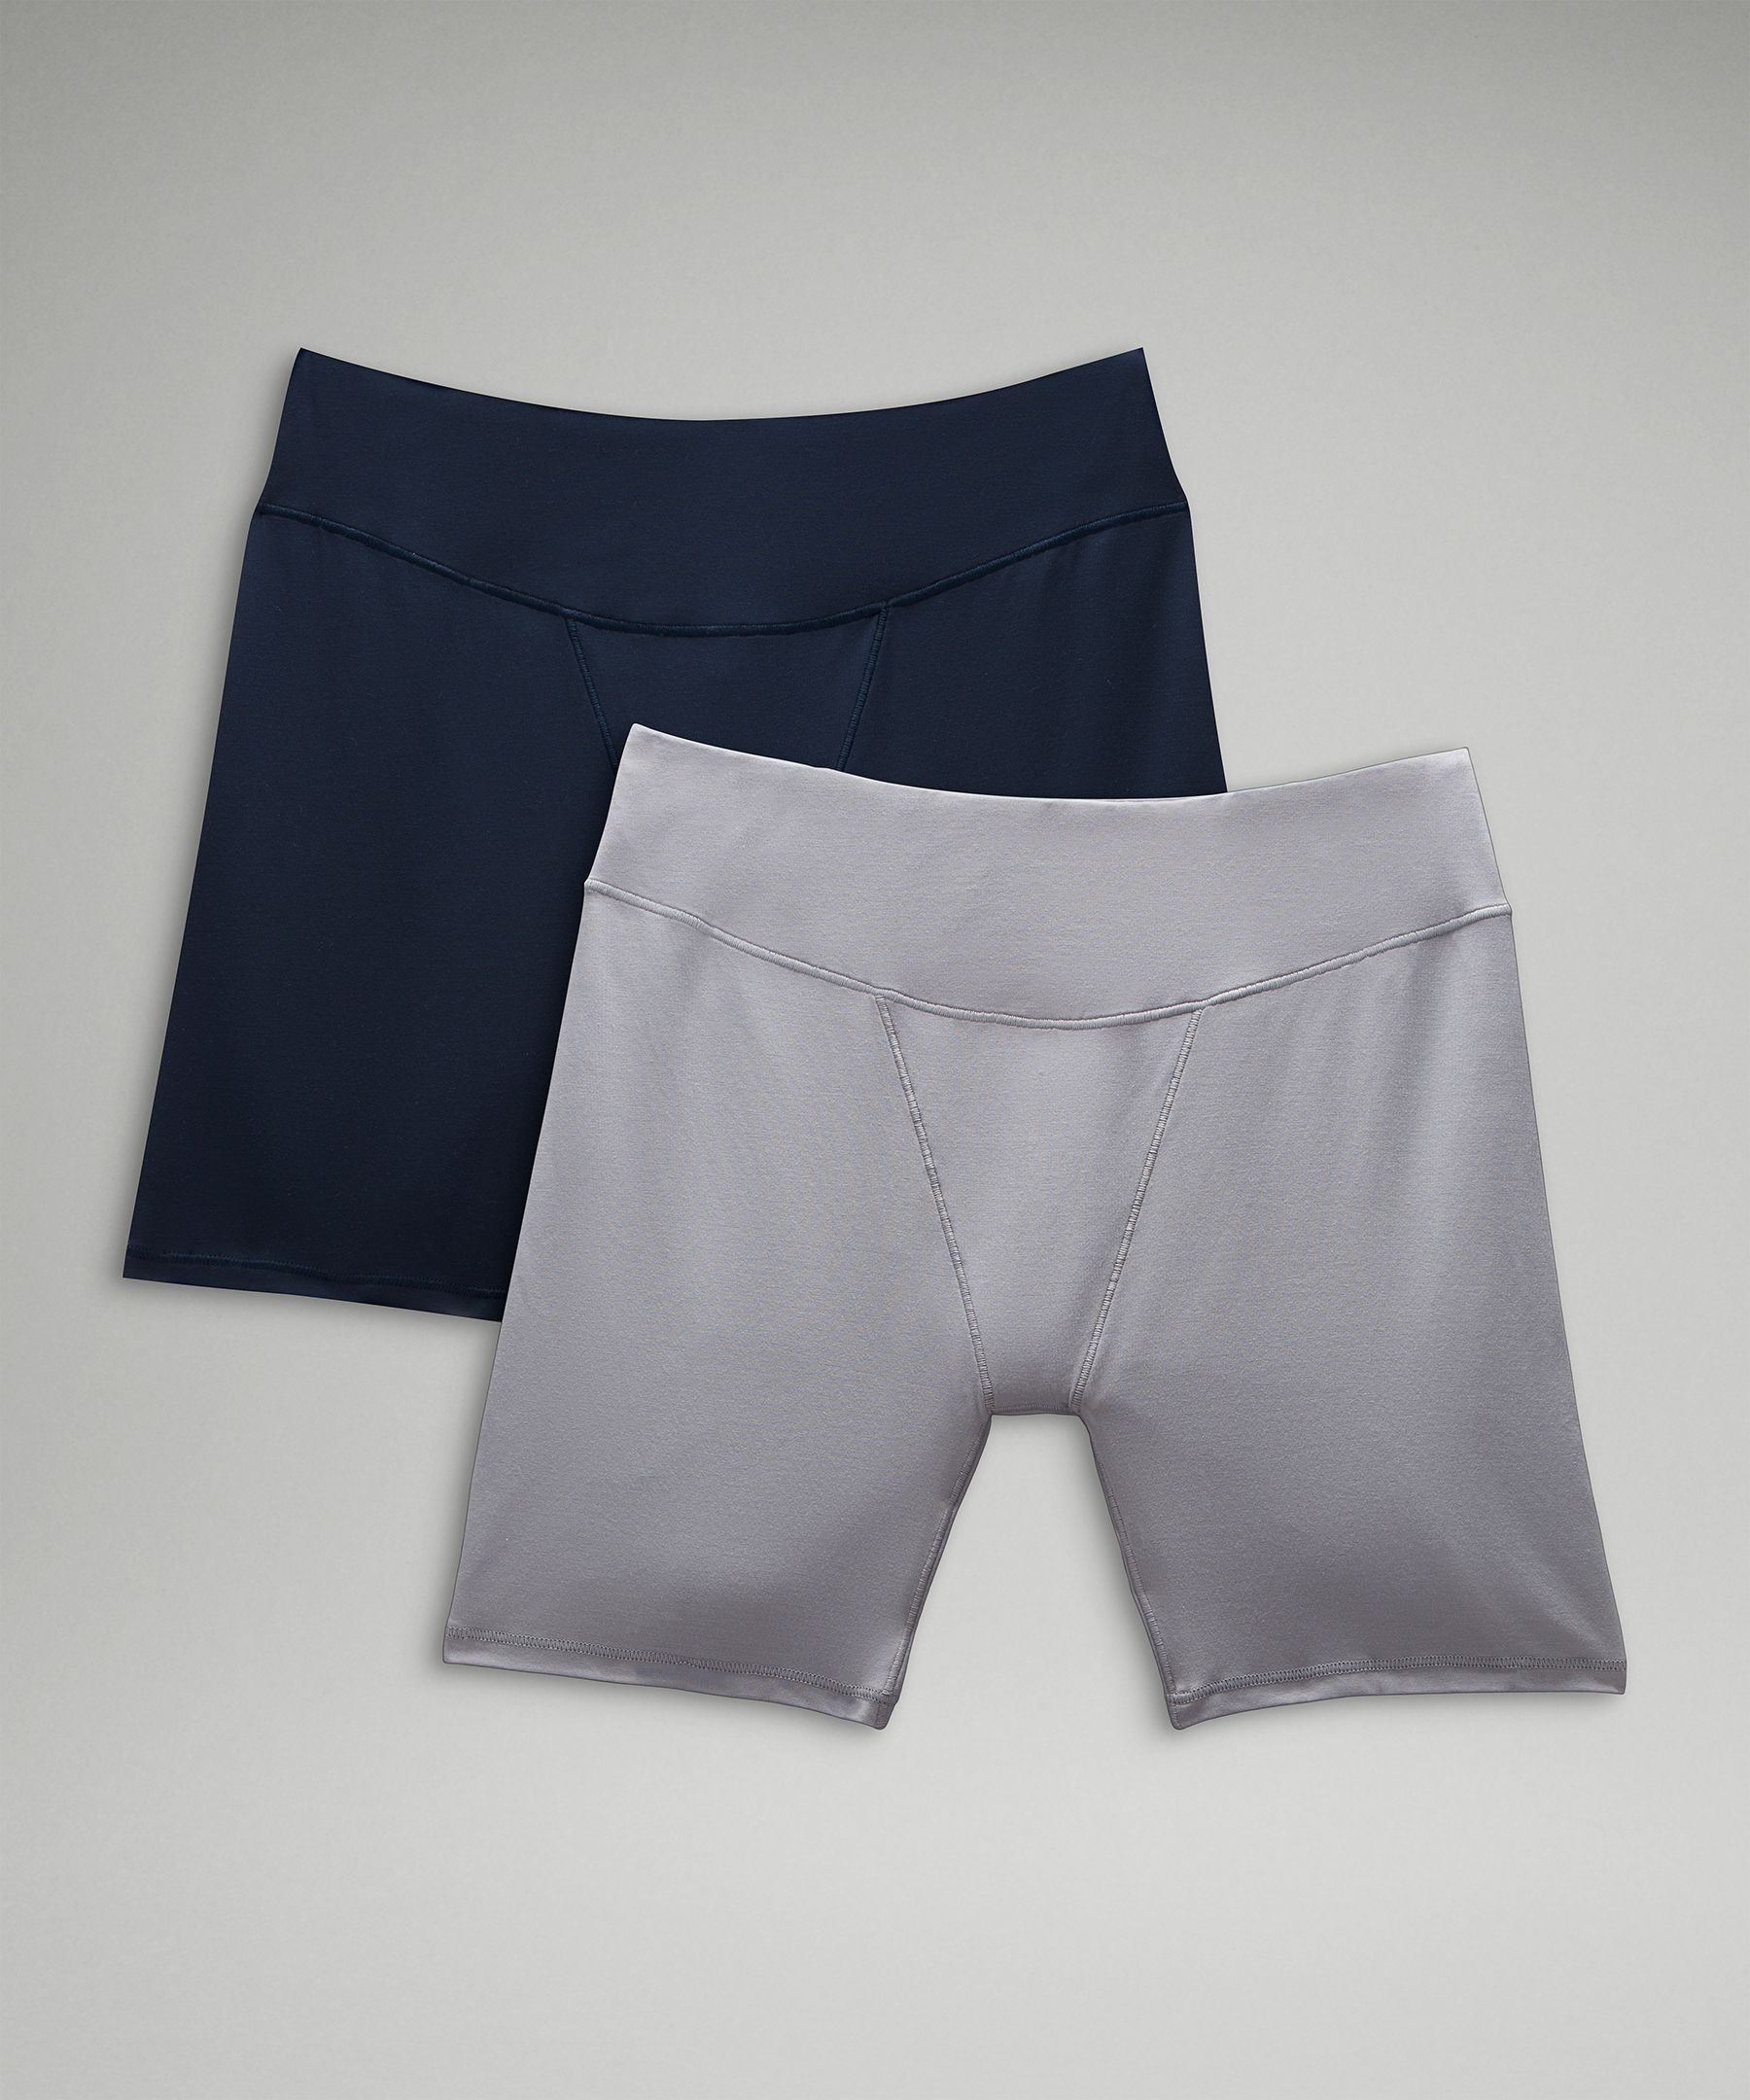 lululemon athletica, Shorts, Underease Superhighrise Shortie Underwear